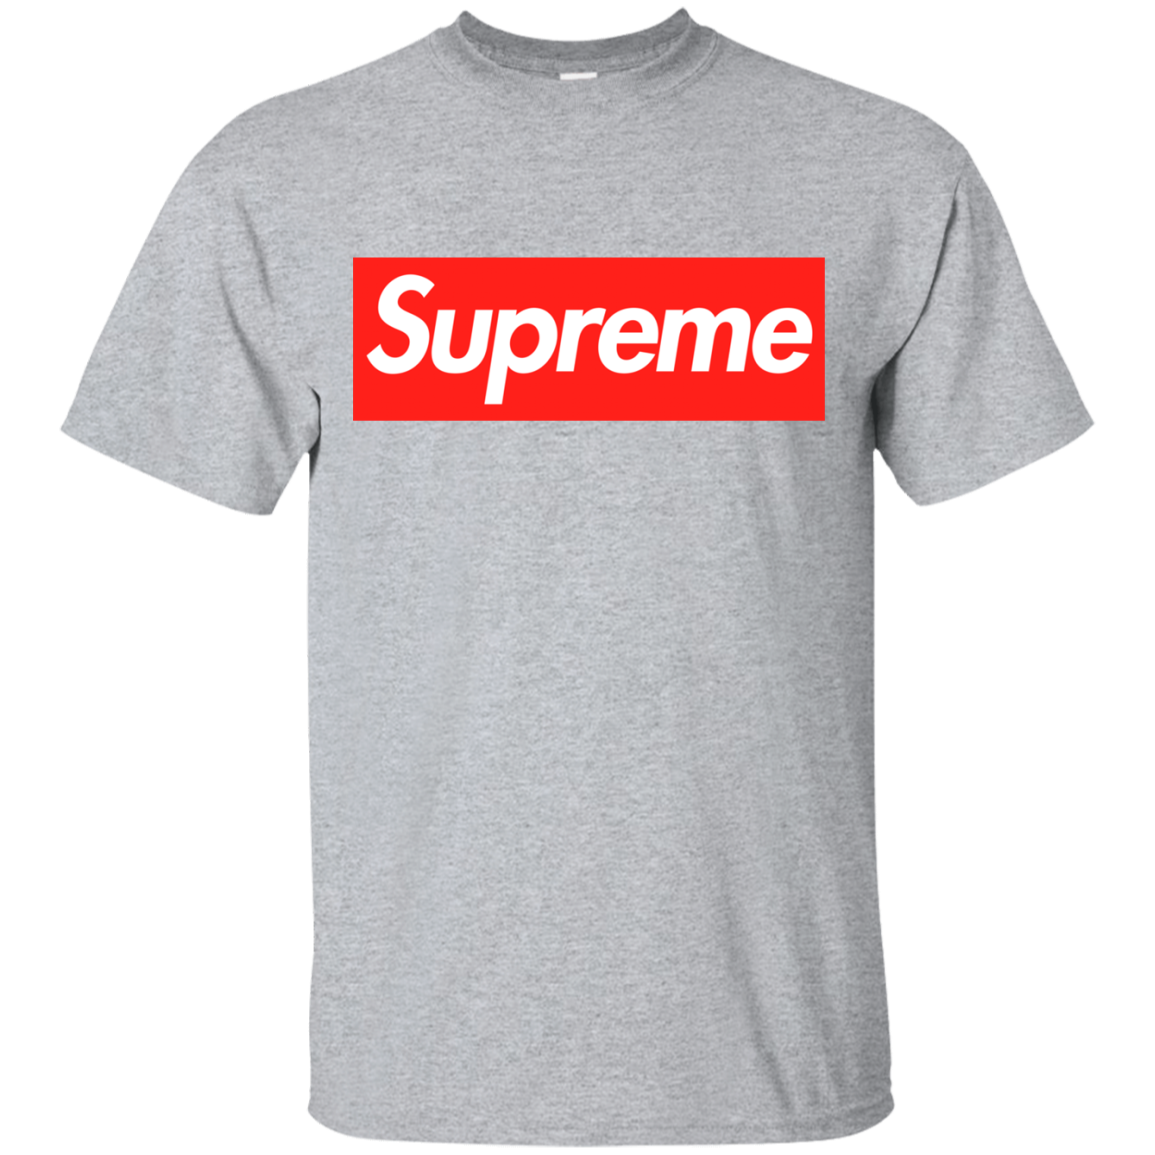 Supreme Shirt, Supreme, Supreme Clothing, Supreme Hat, Supreme Backpack ...